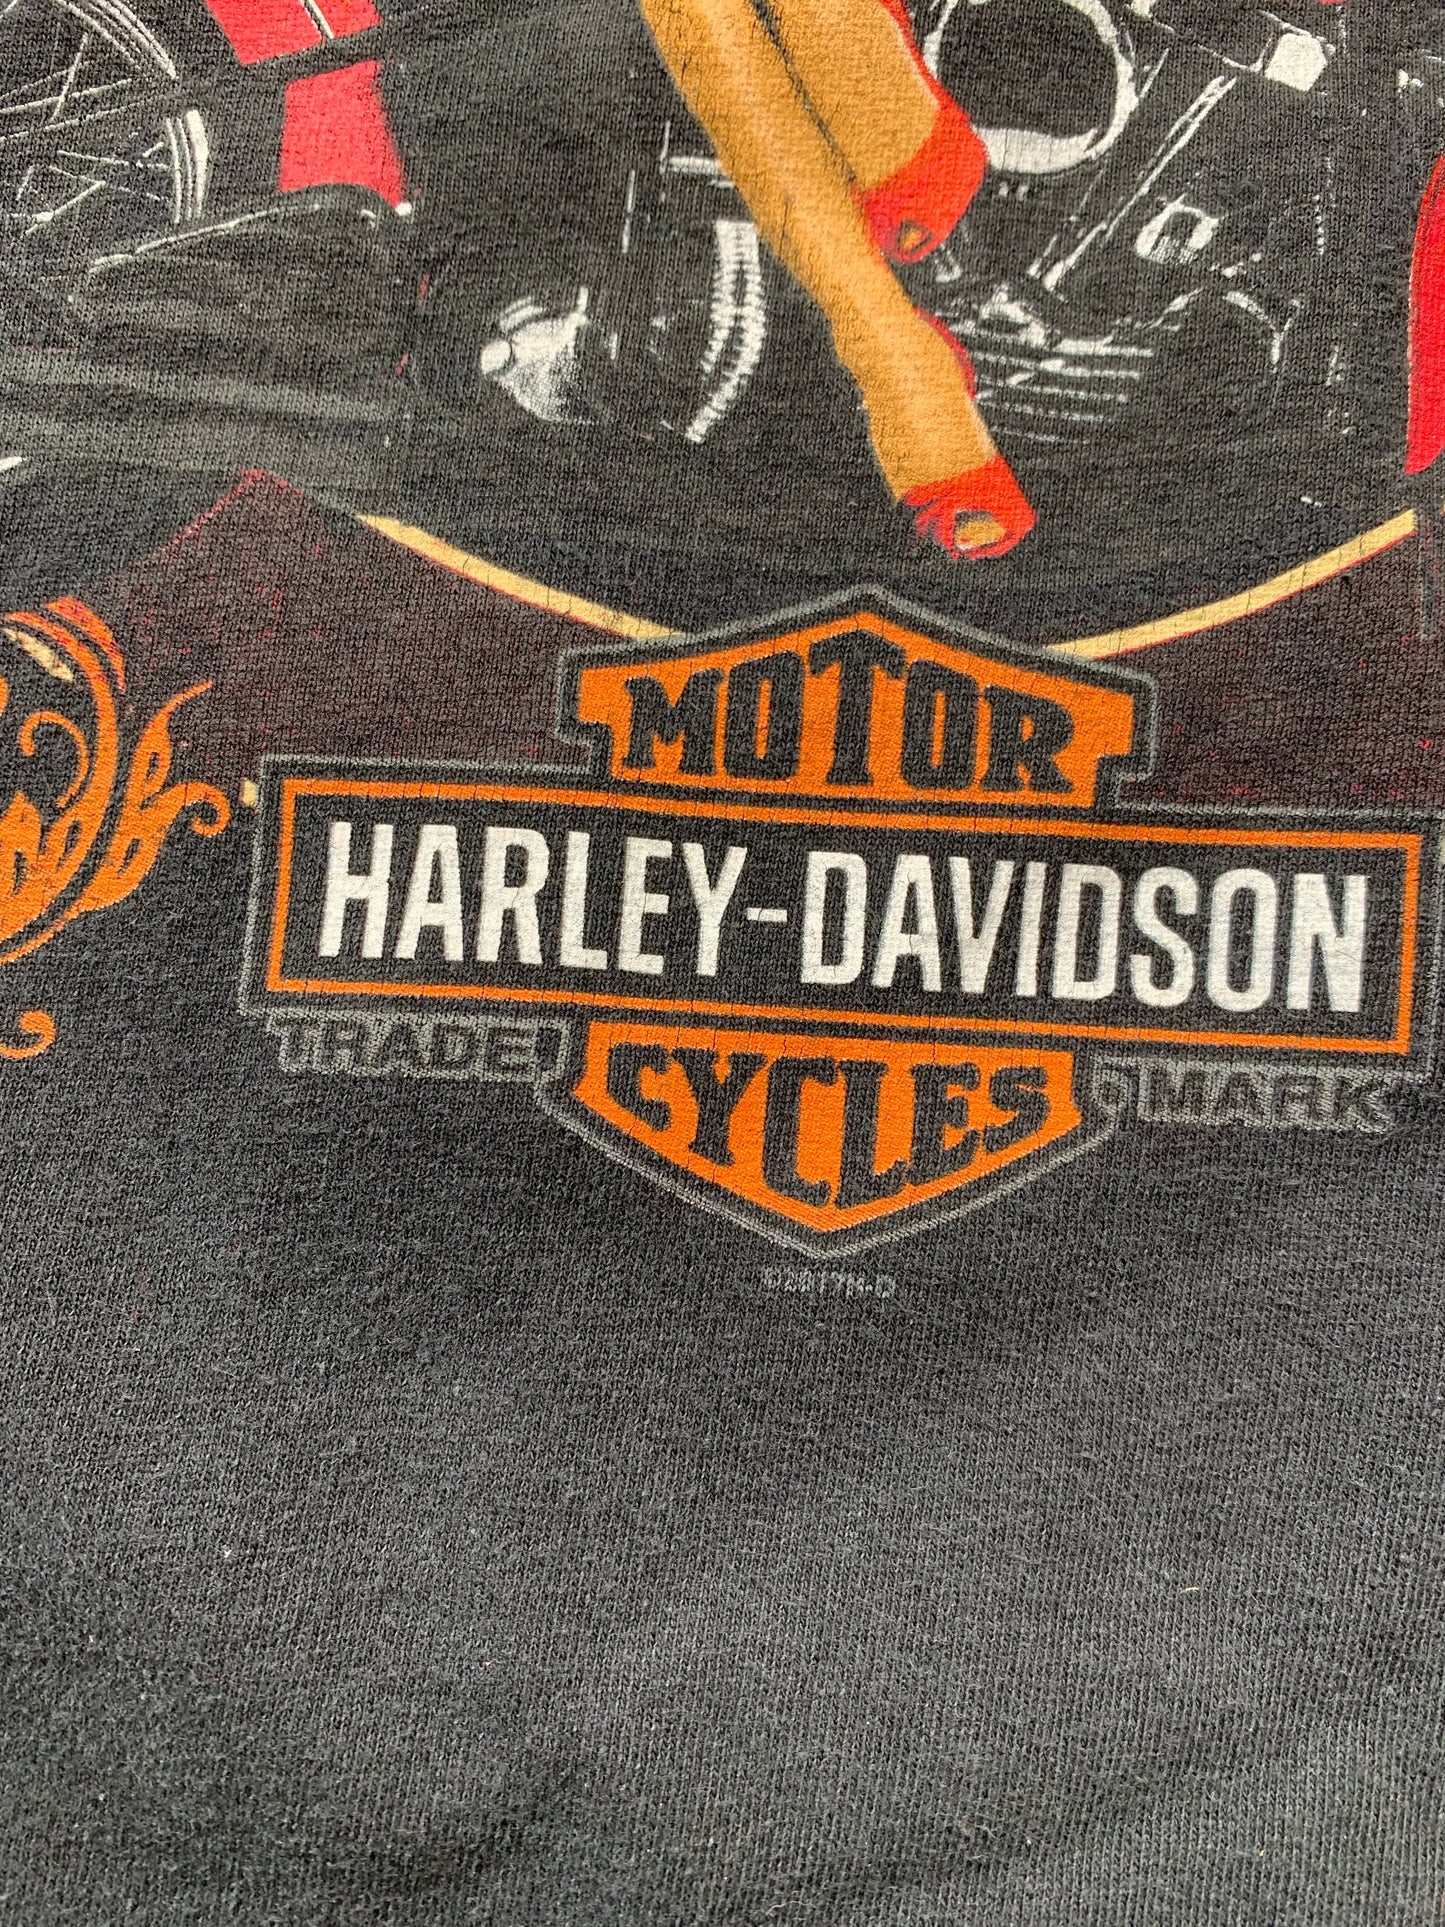 (2X) 2017 Harley Davidson Shorties Tee